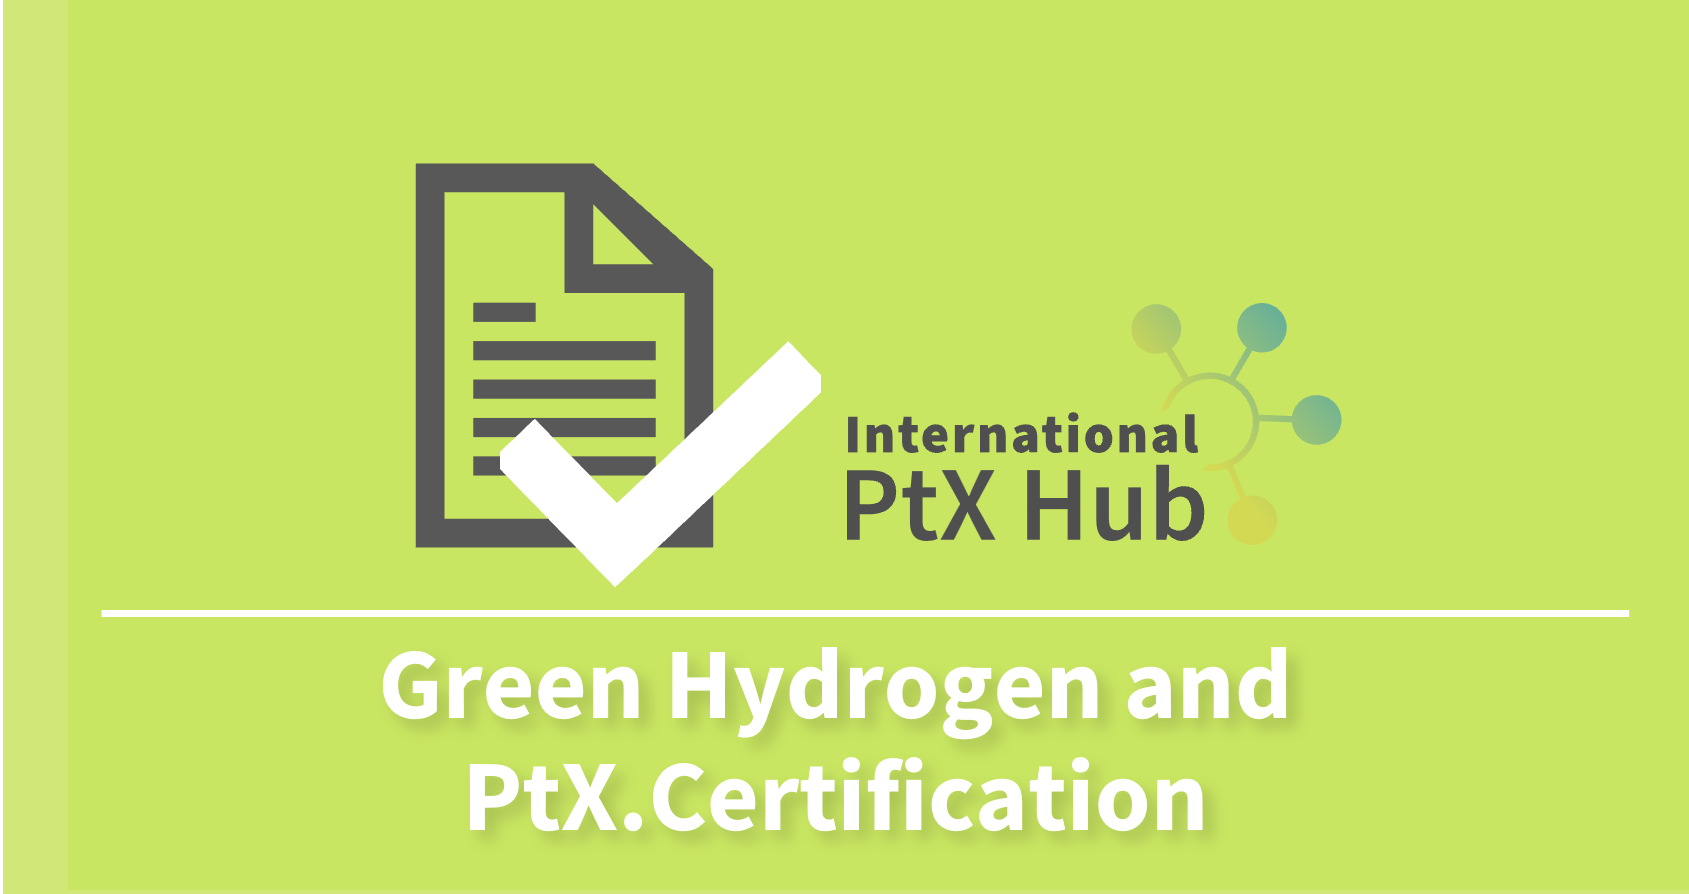 PtX certification